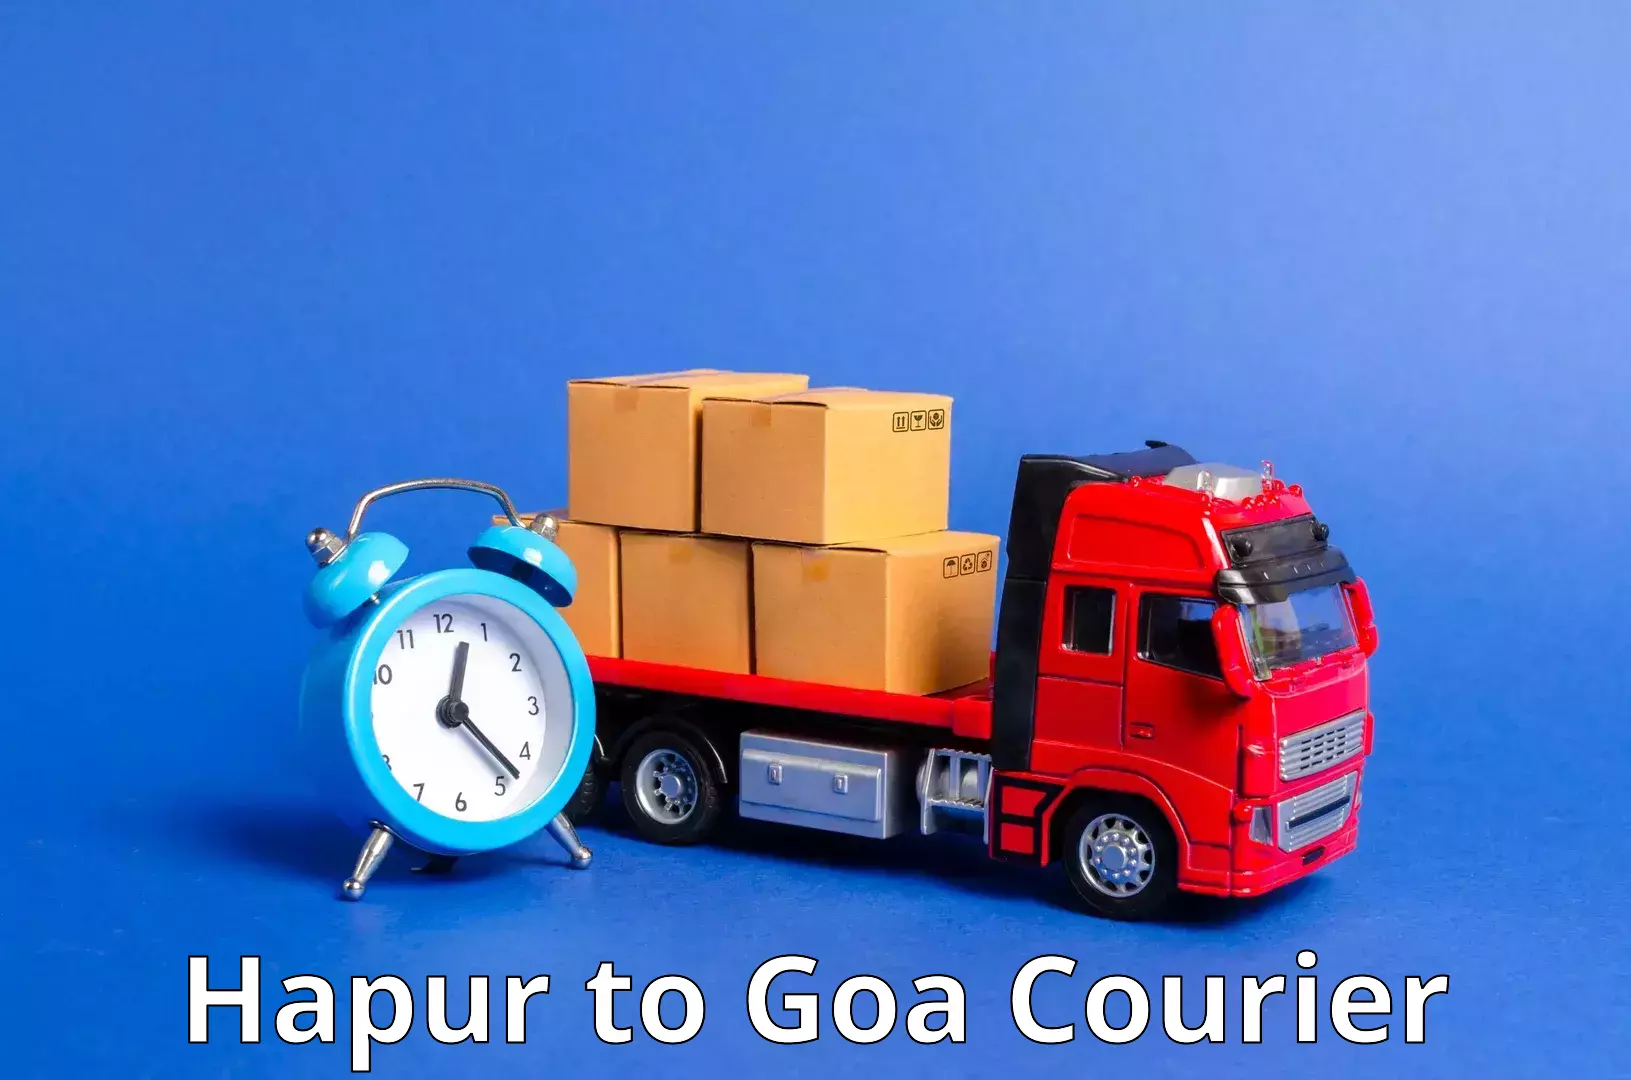 User-friendly courier app Hapur to Goa